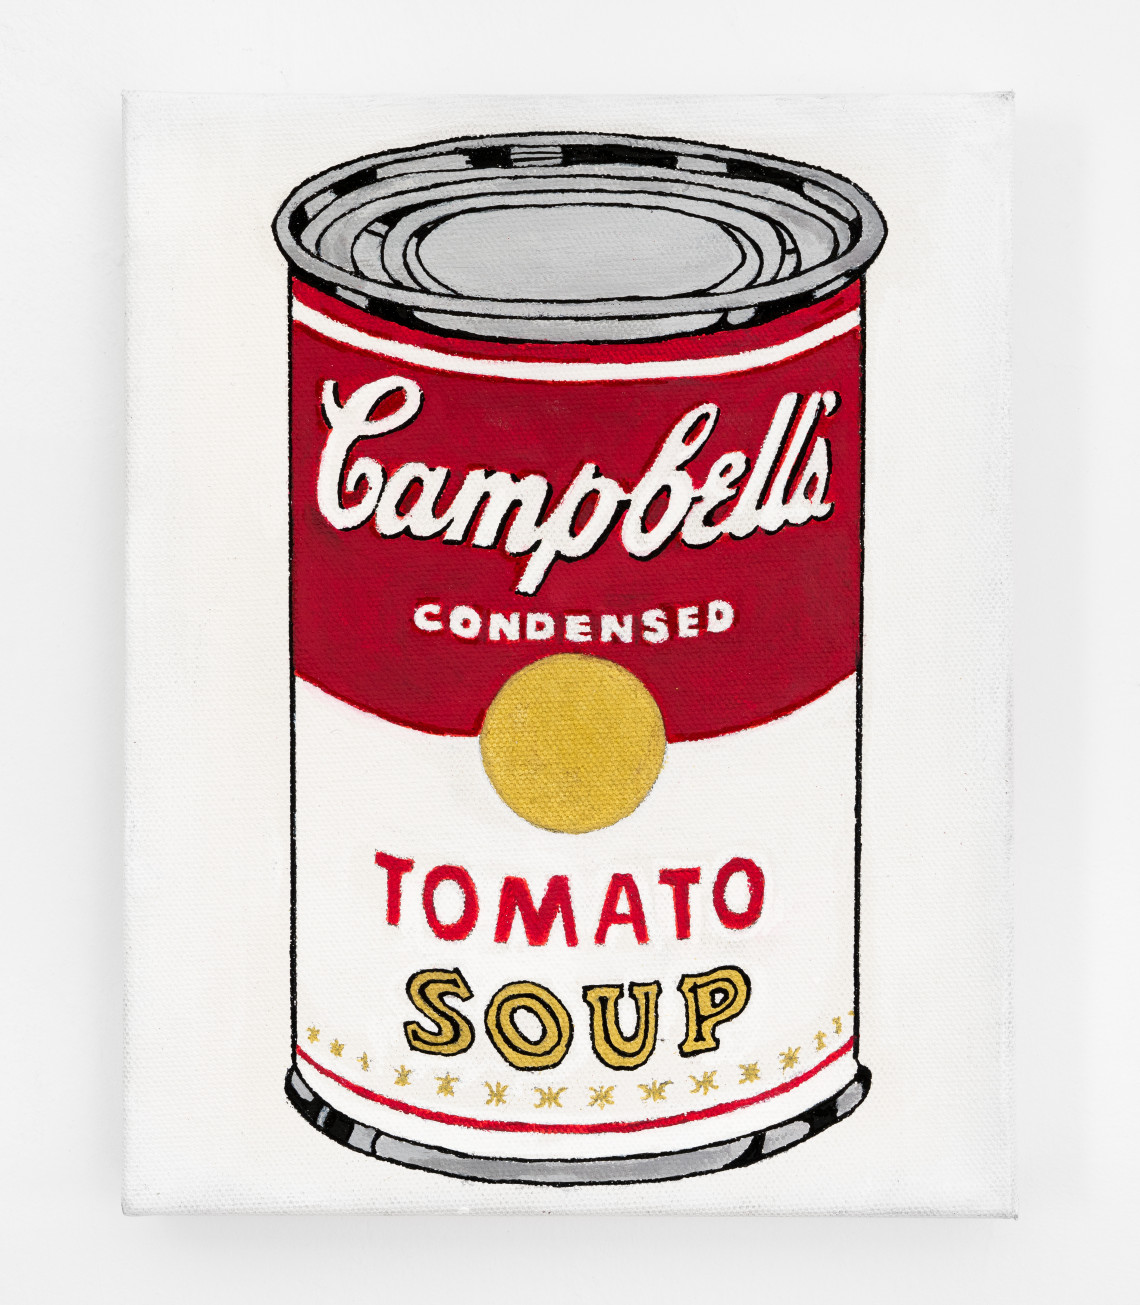  - Richard Pettibone Andy Warhol Campbell’s Soup Can Tomato 1962 2018-2019 # 1